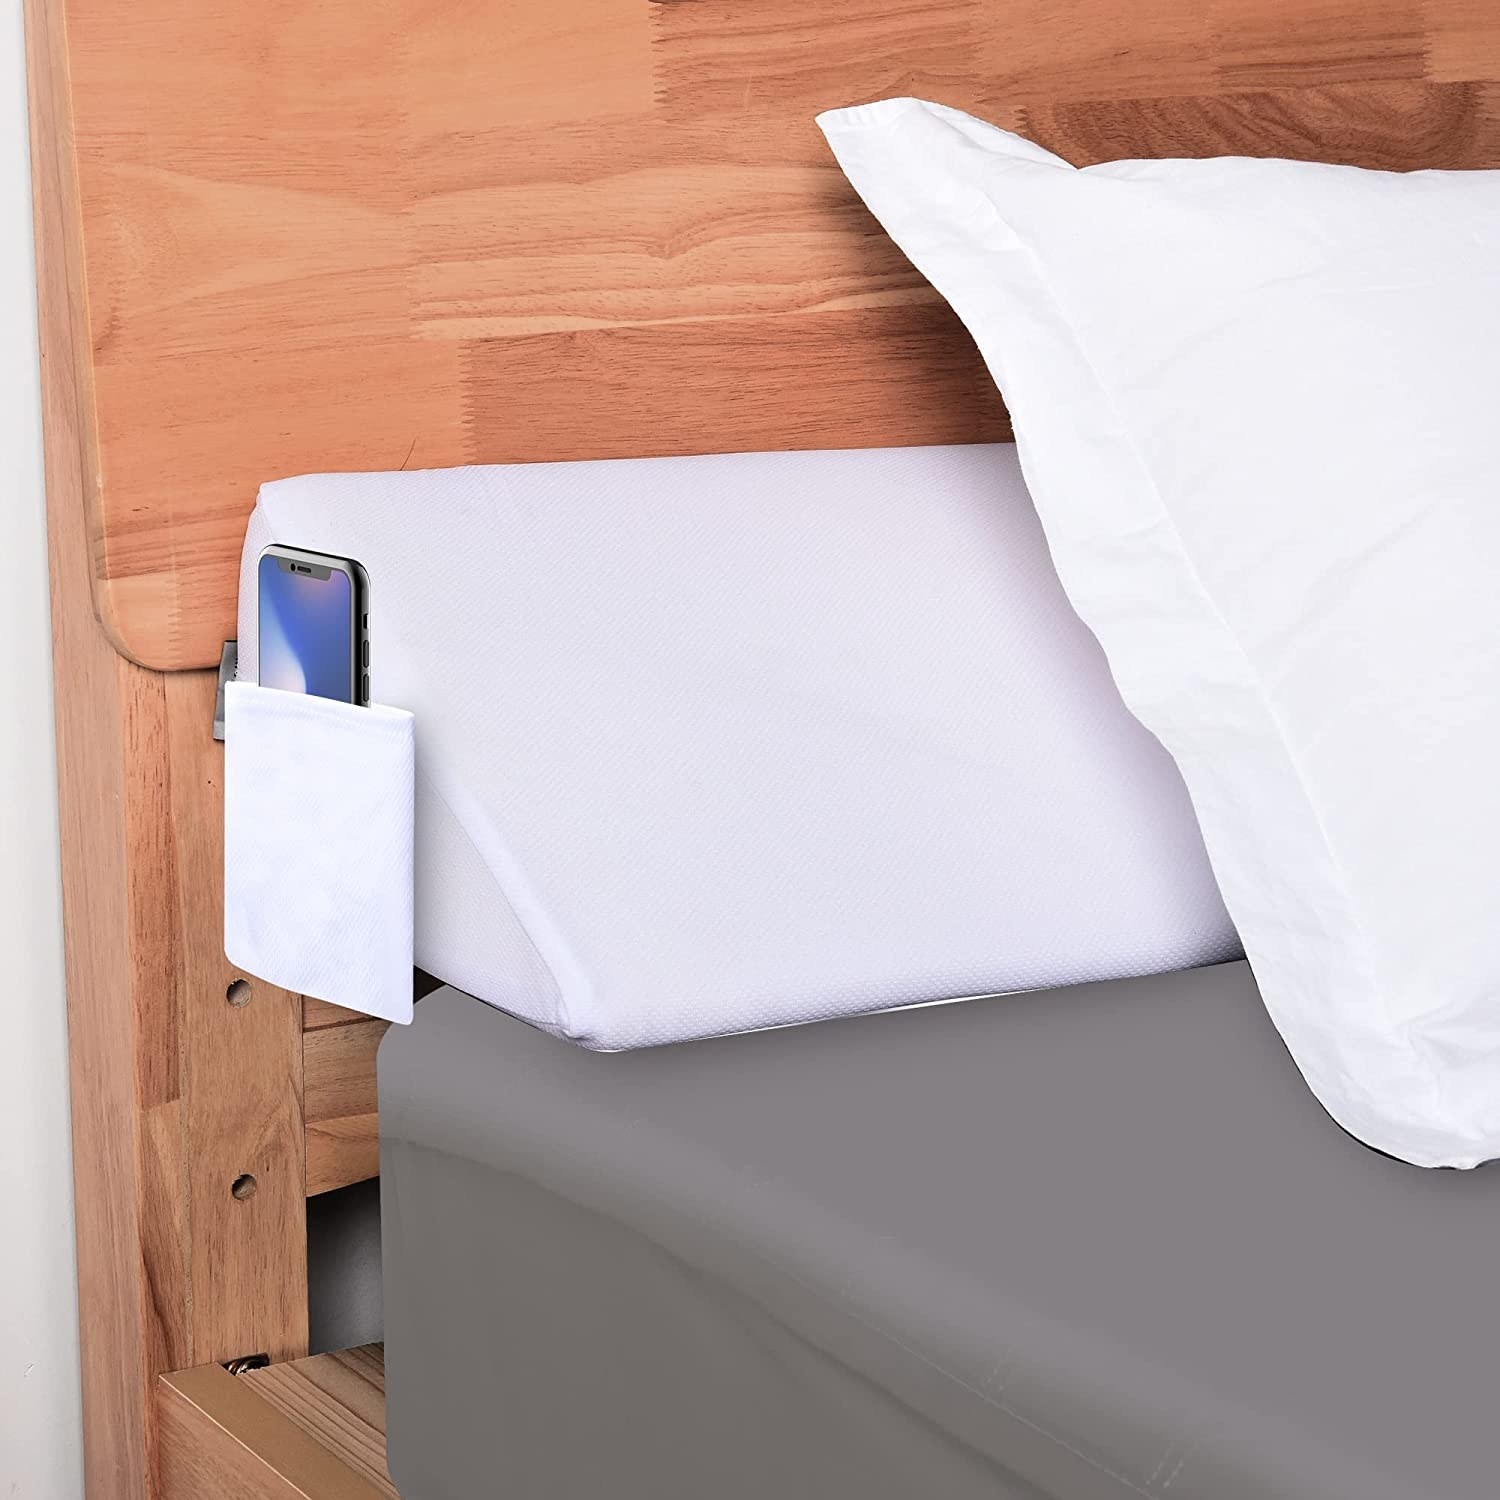 the wedge pillow under a pillow on a mattress against the headboard